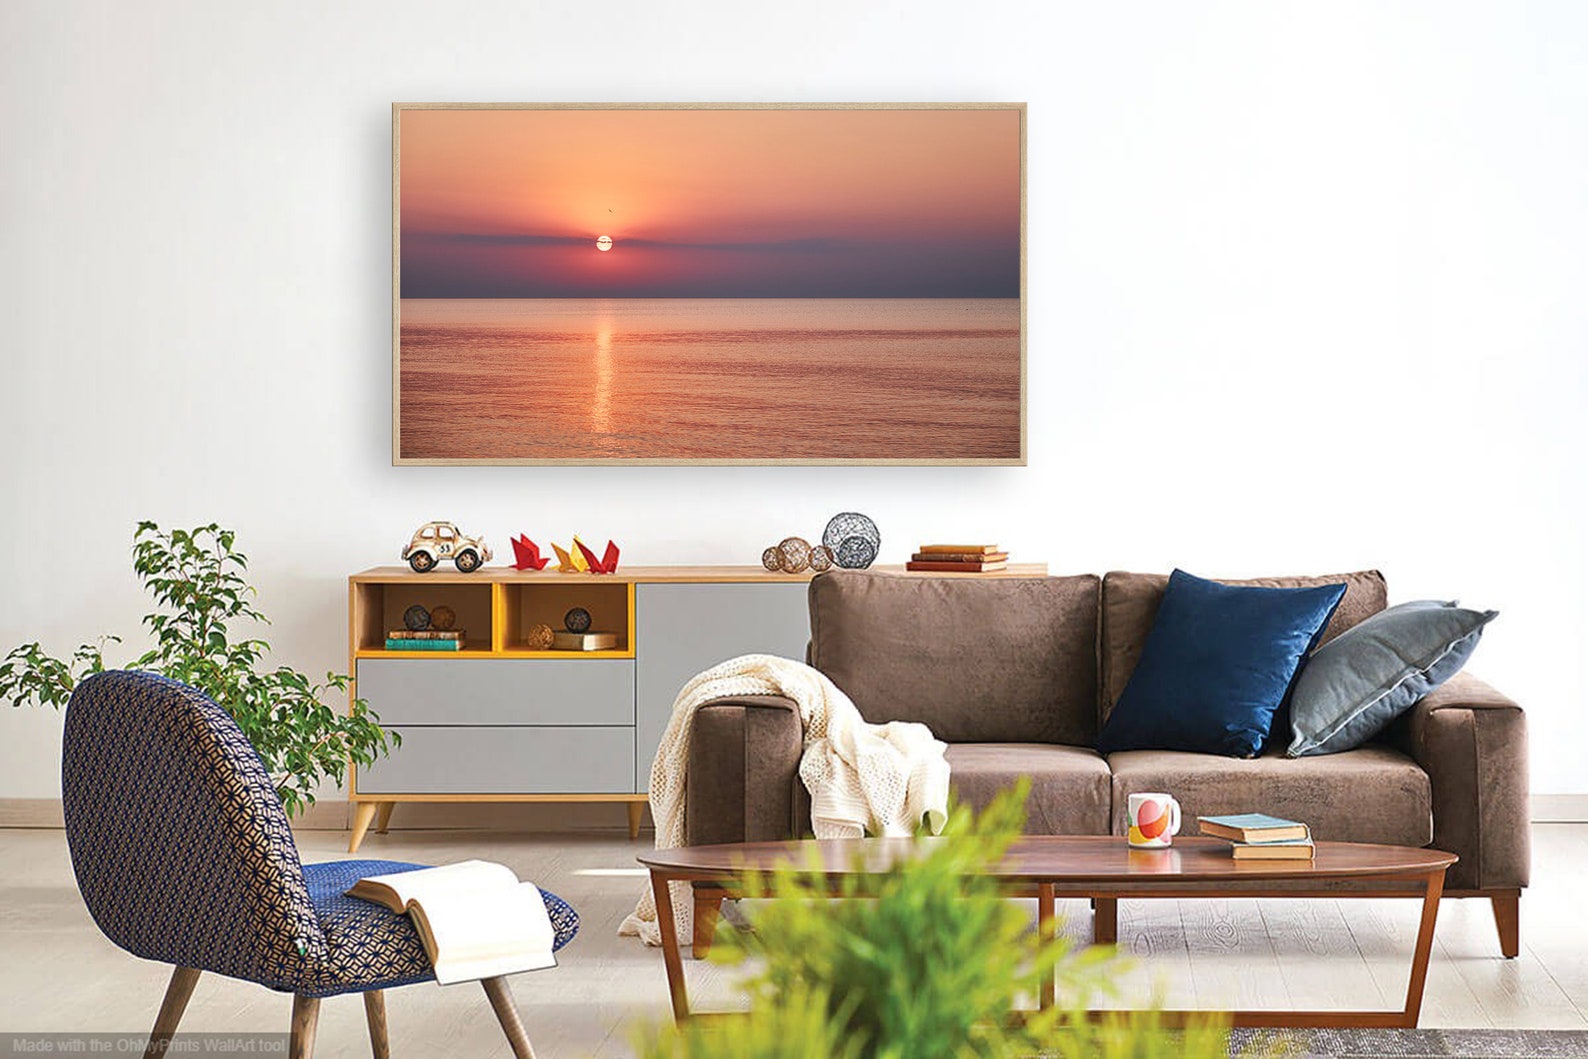 Samsung Frame Tv Art. Pastel Golden Hour. Sea Sunset. Instant - Etsy